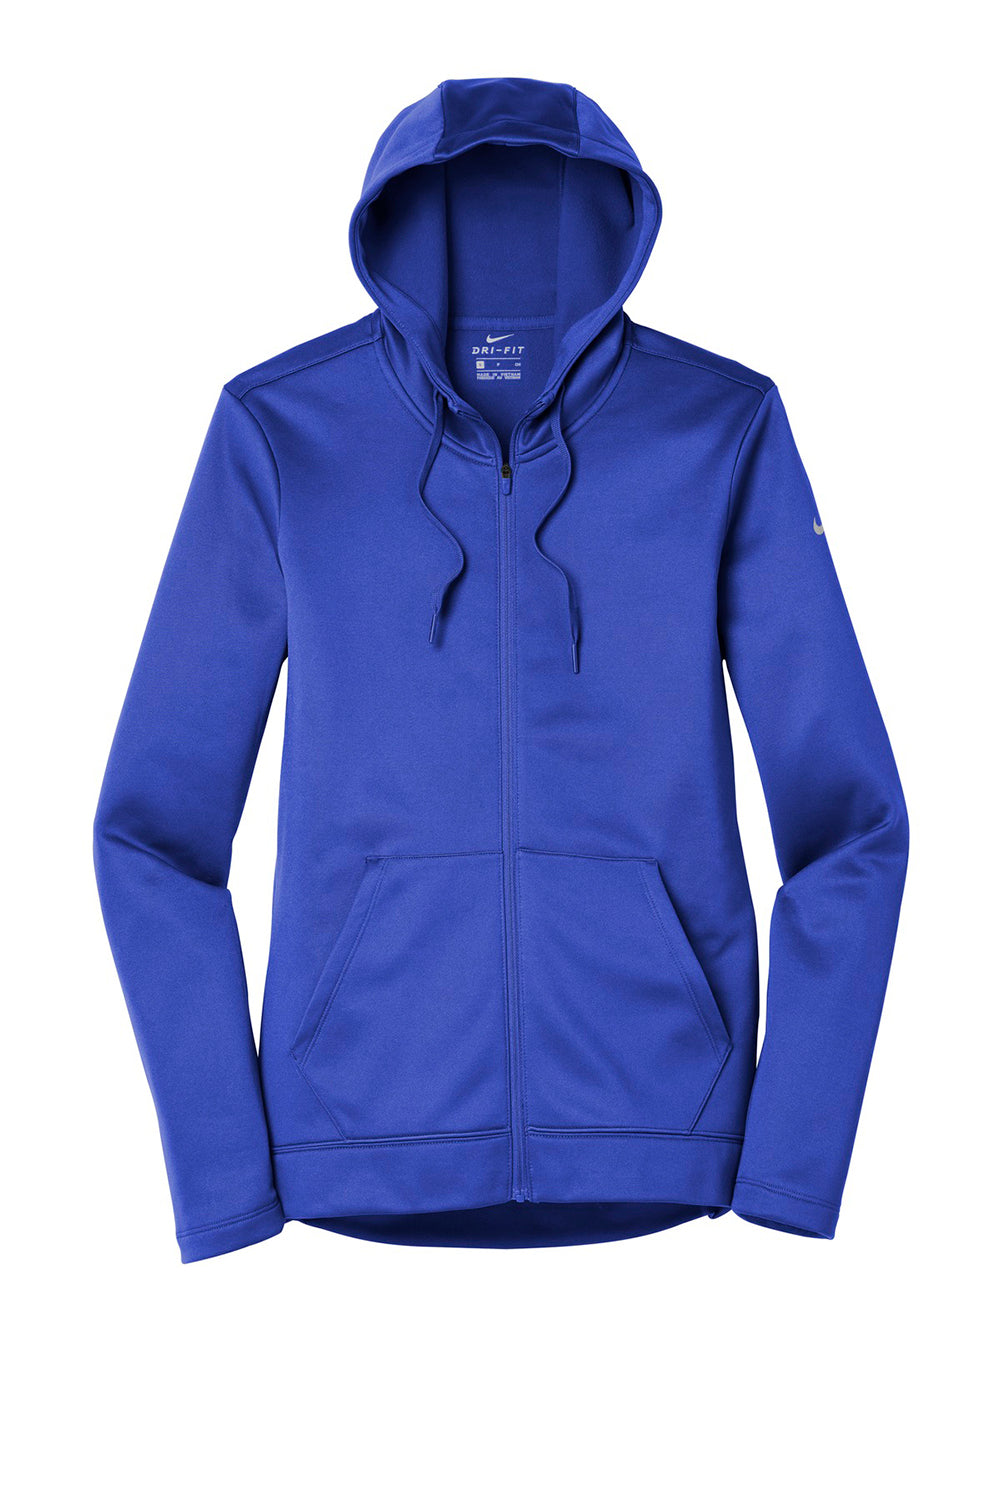 Nike NKAH6264 Womens Therma-Fit Moisture Wicking Fleece Full Zip Hooded Sweatshirt Hoodie Game Royal Blue Flat Front